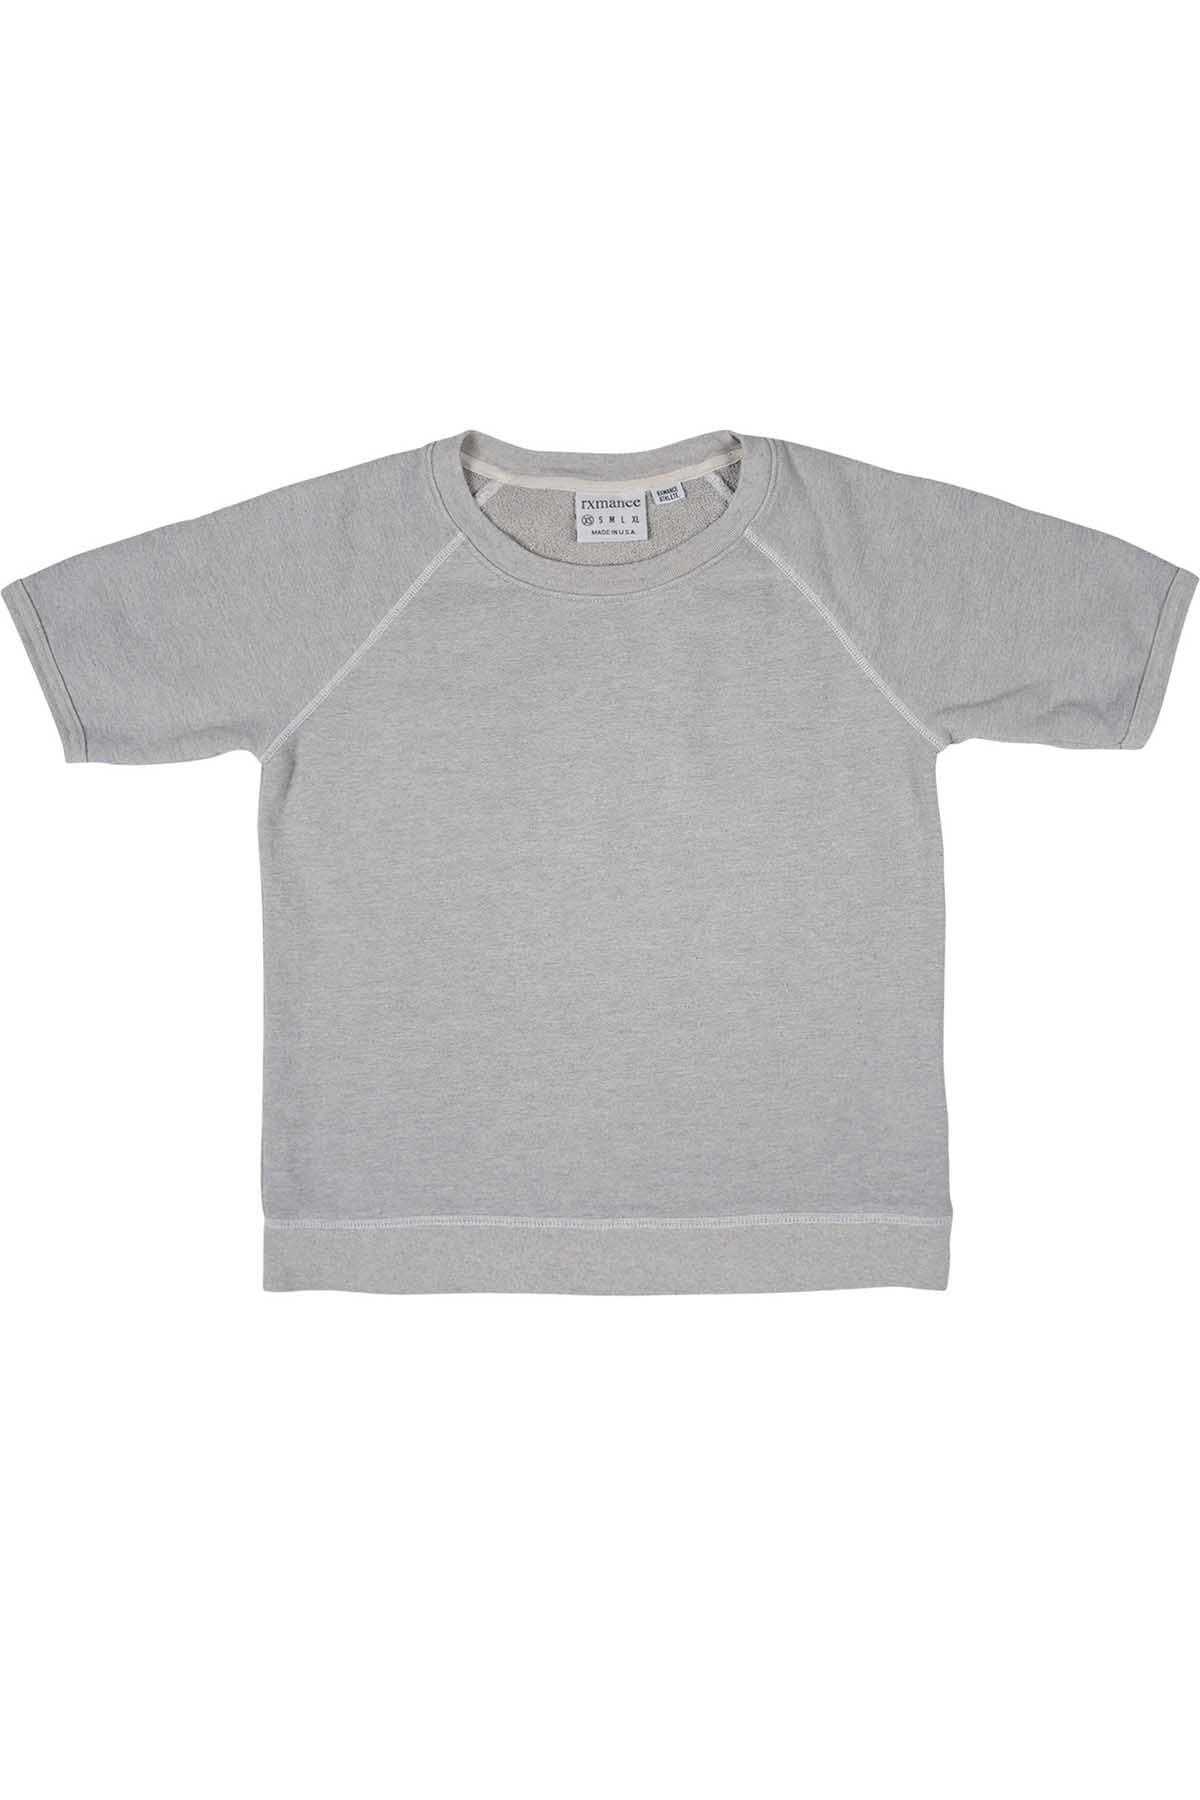 Rxmance Unisex Dawn-Grey Short-Sleeve Sweatshirt